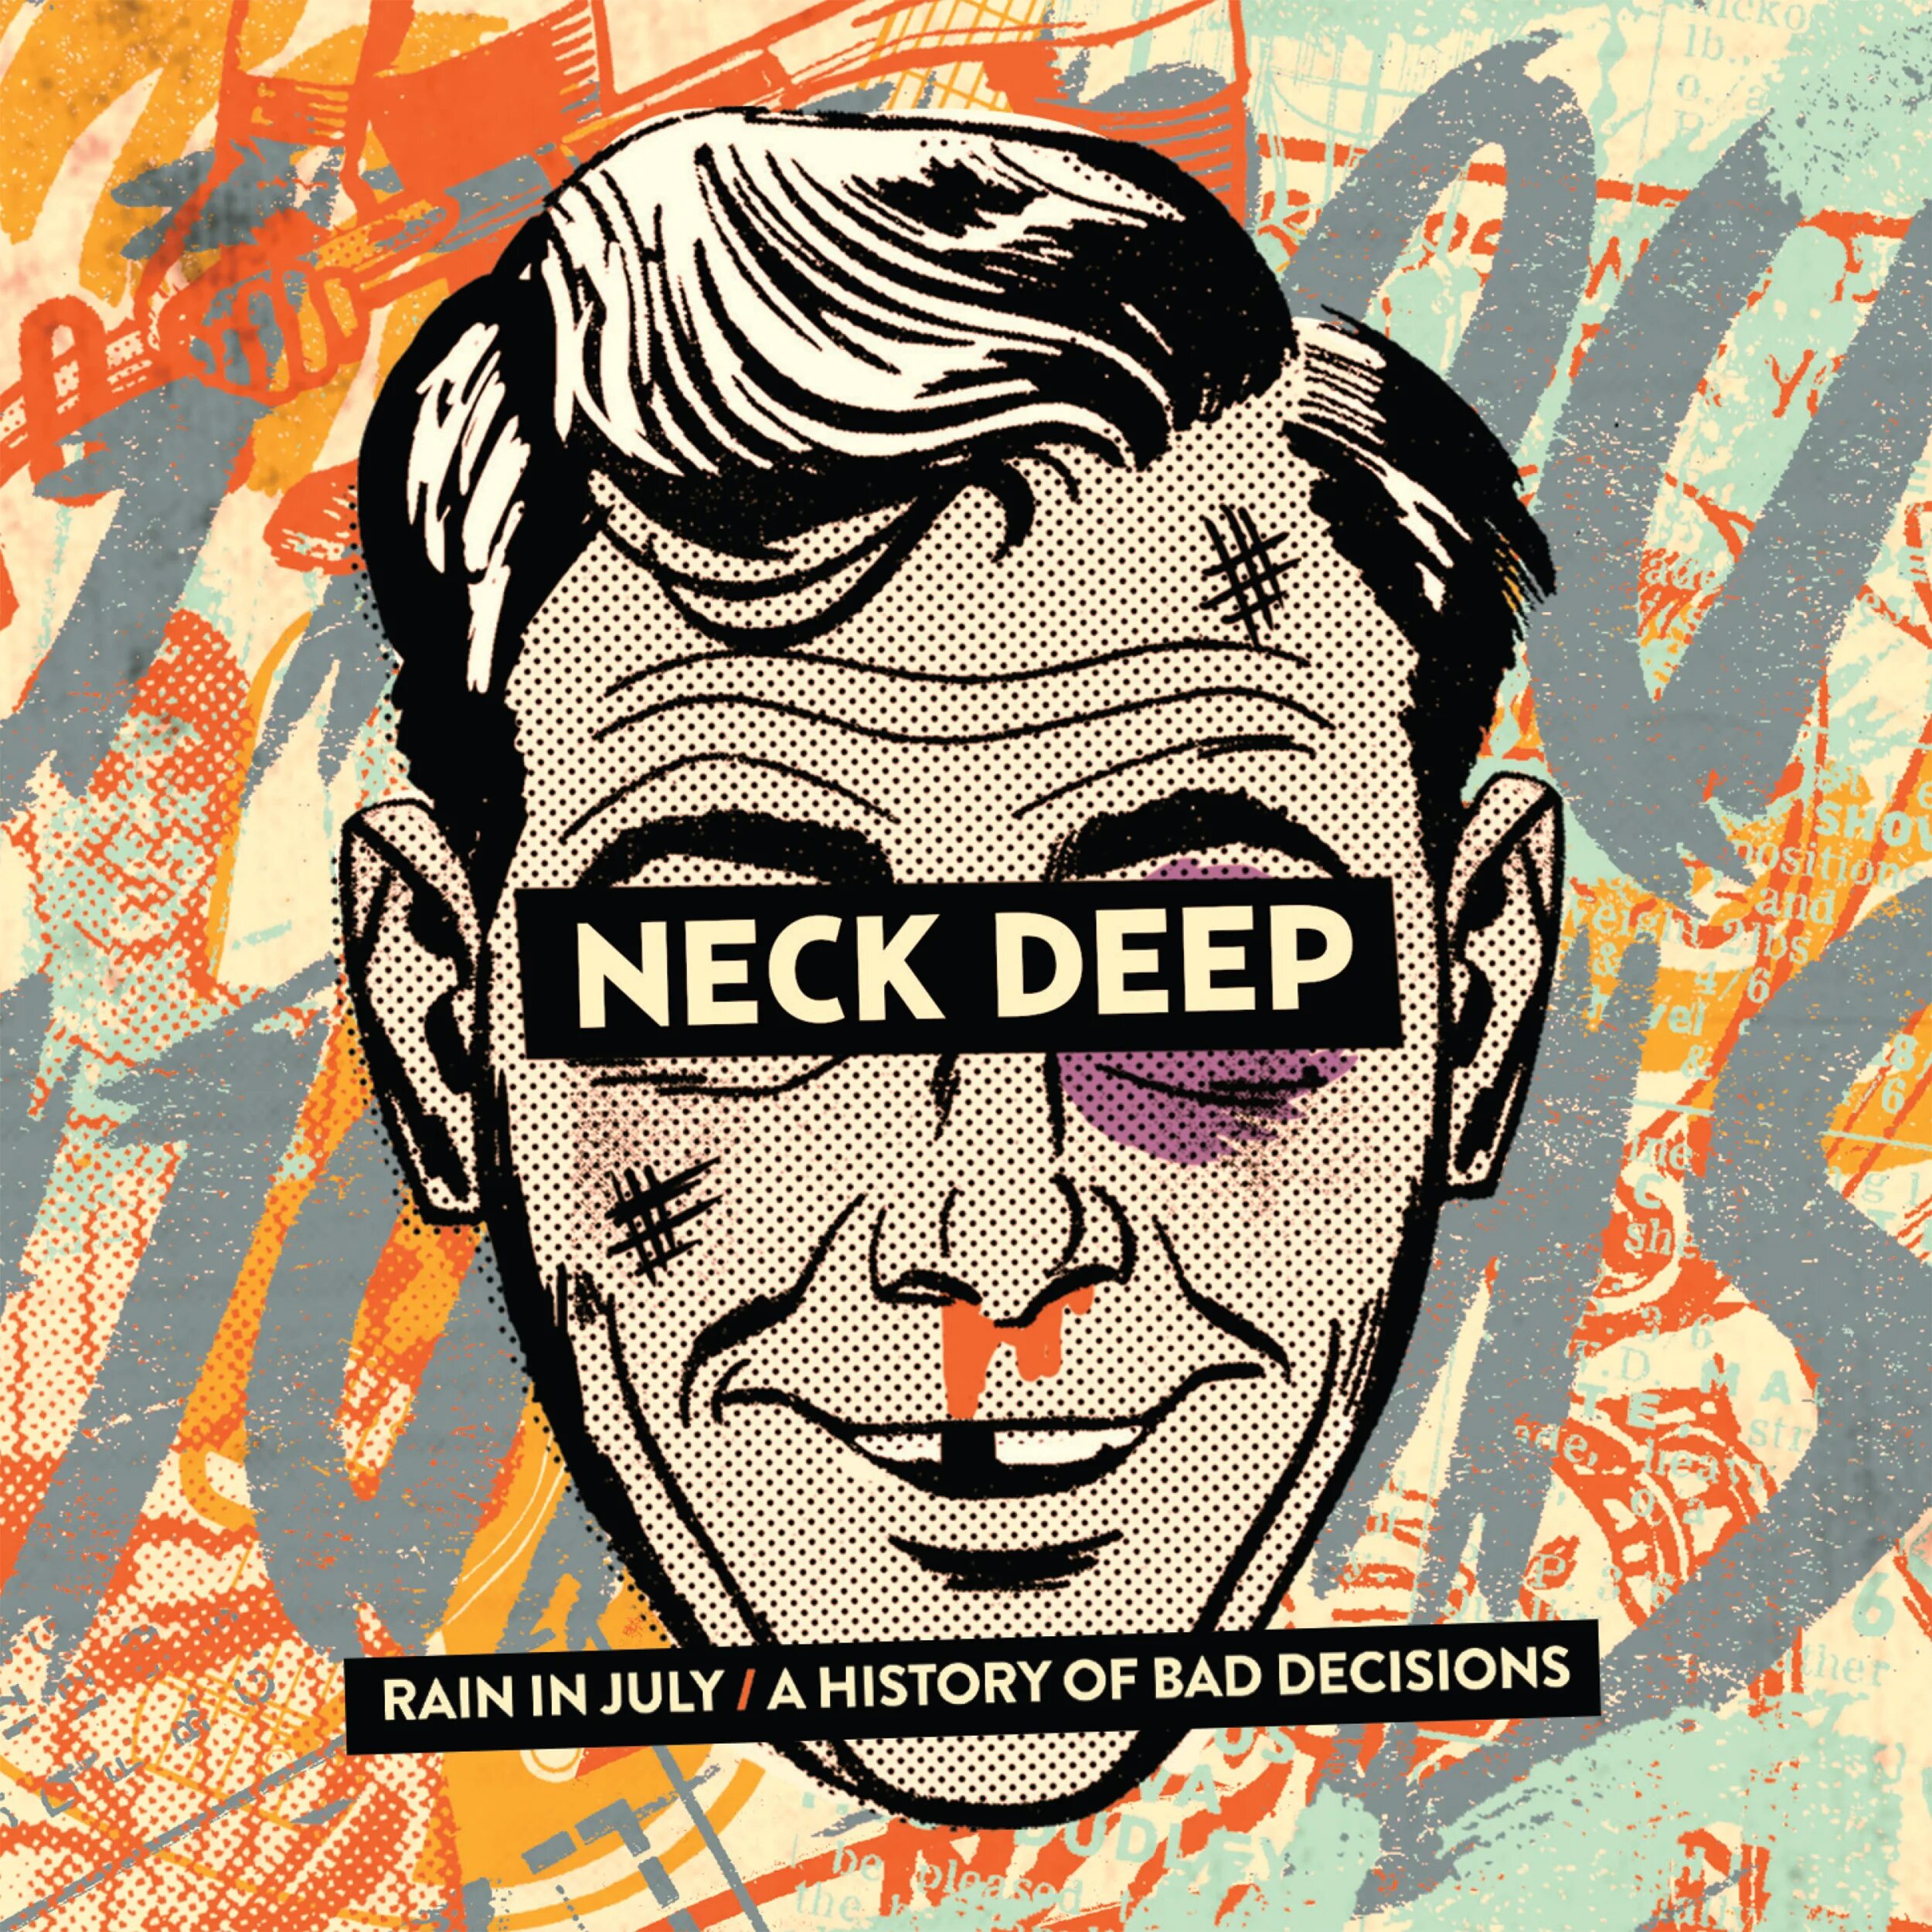 Over deep. Альбом Neck Deep. Фото Neck Deep обложка. Neck Deep album Cover. "A History of graphic Design" Филиппа Меггса.